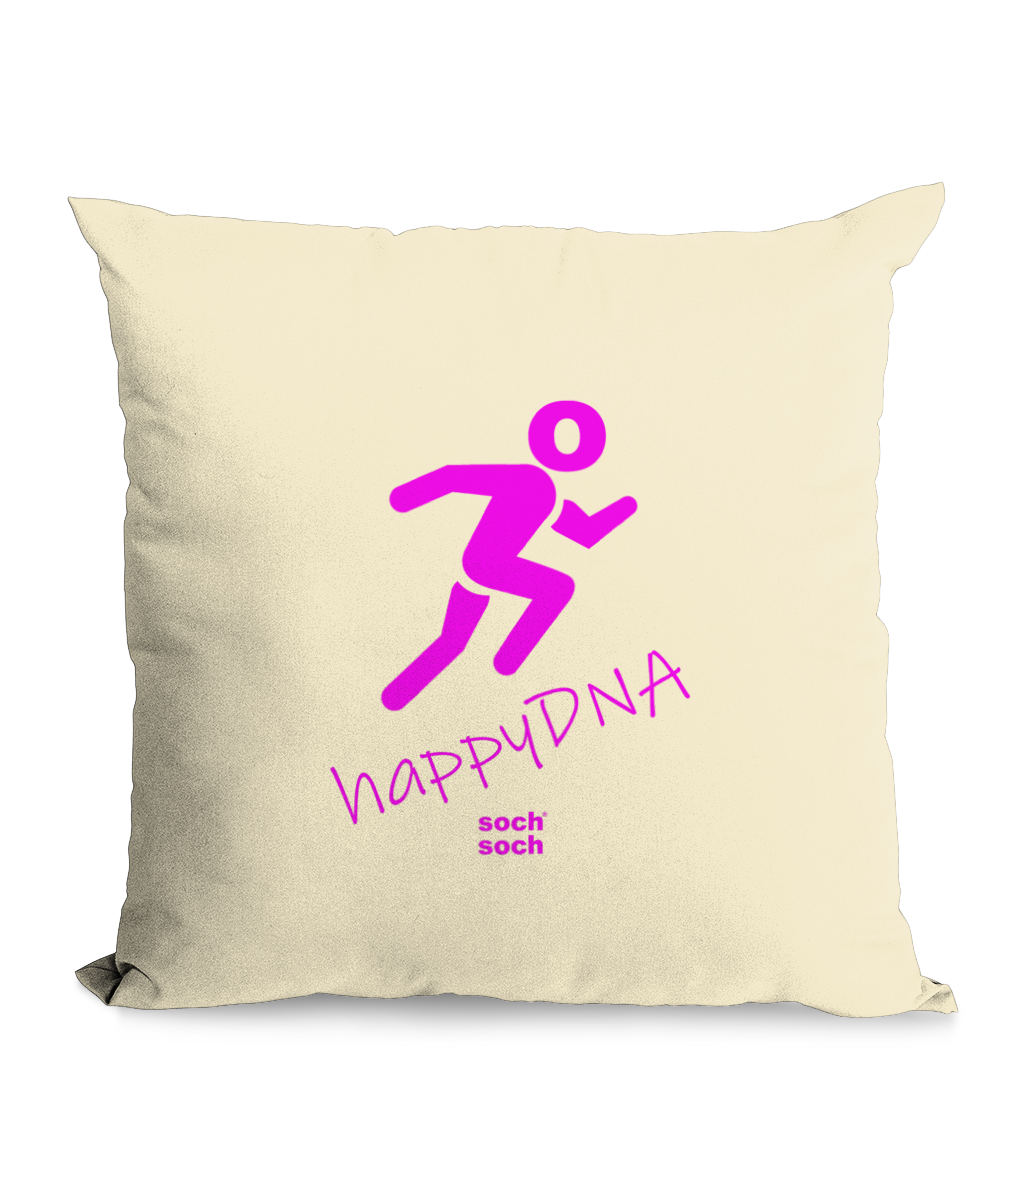 Natural Throw Cushion Pink Running happyDNA